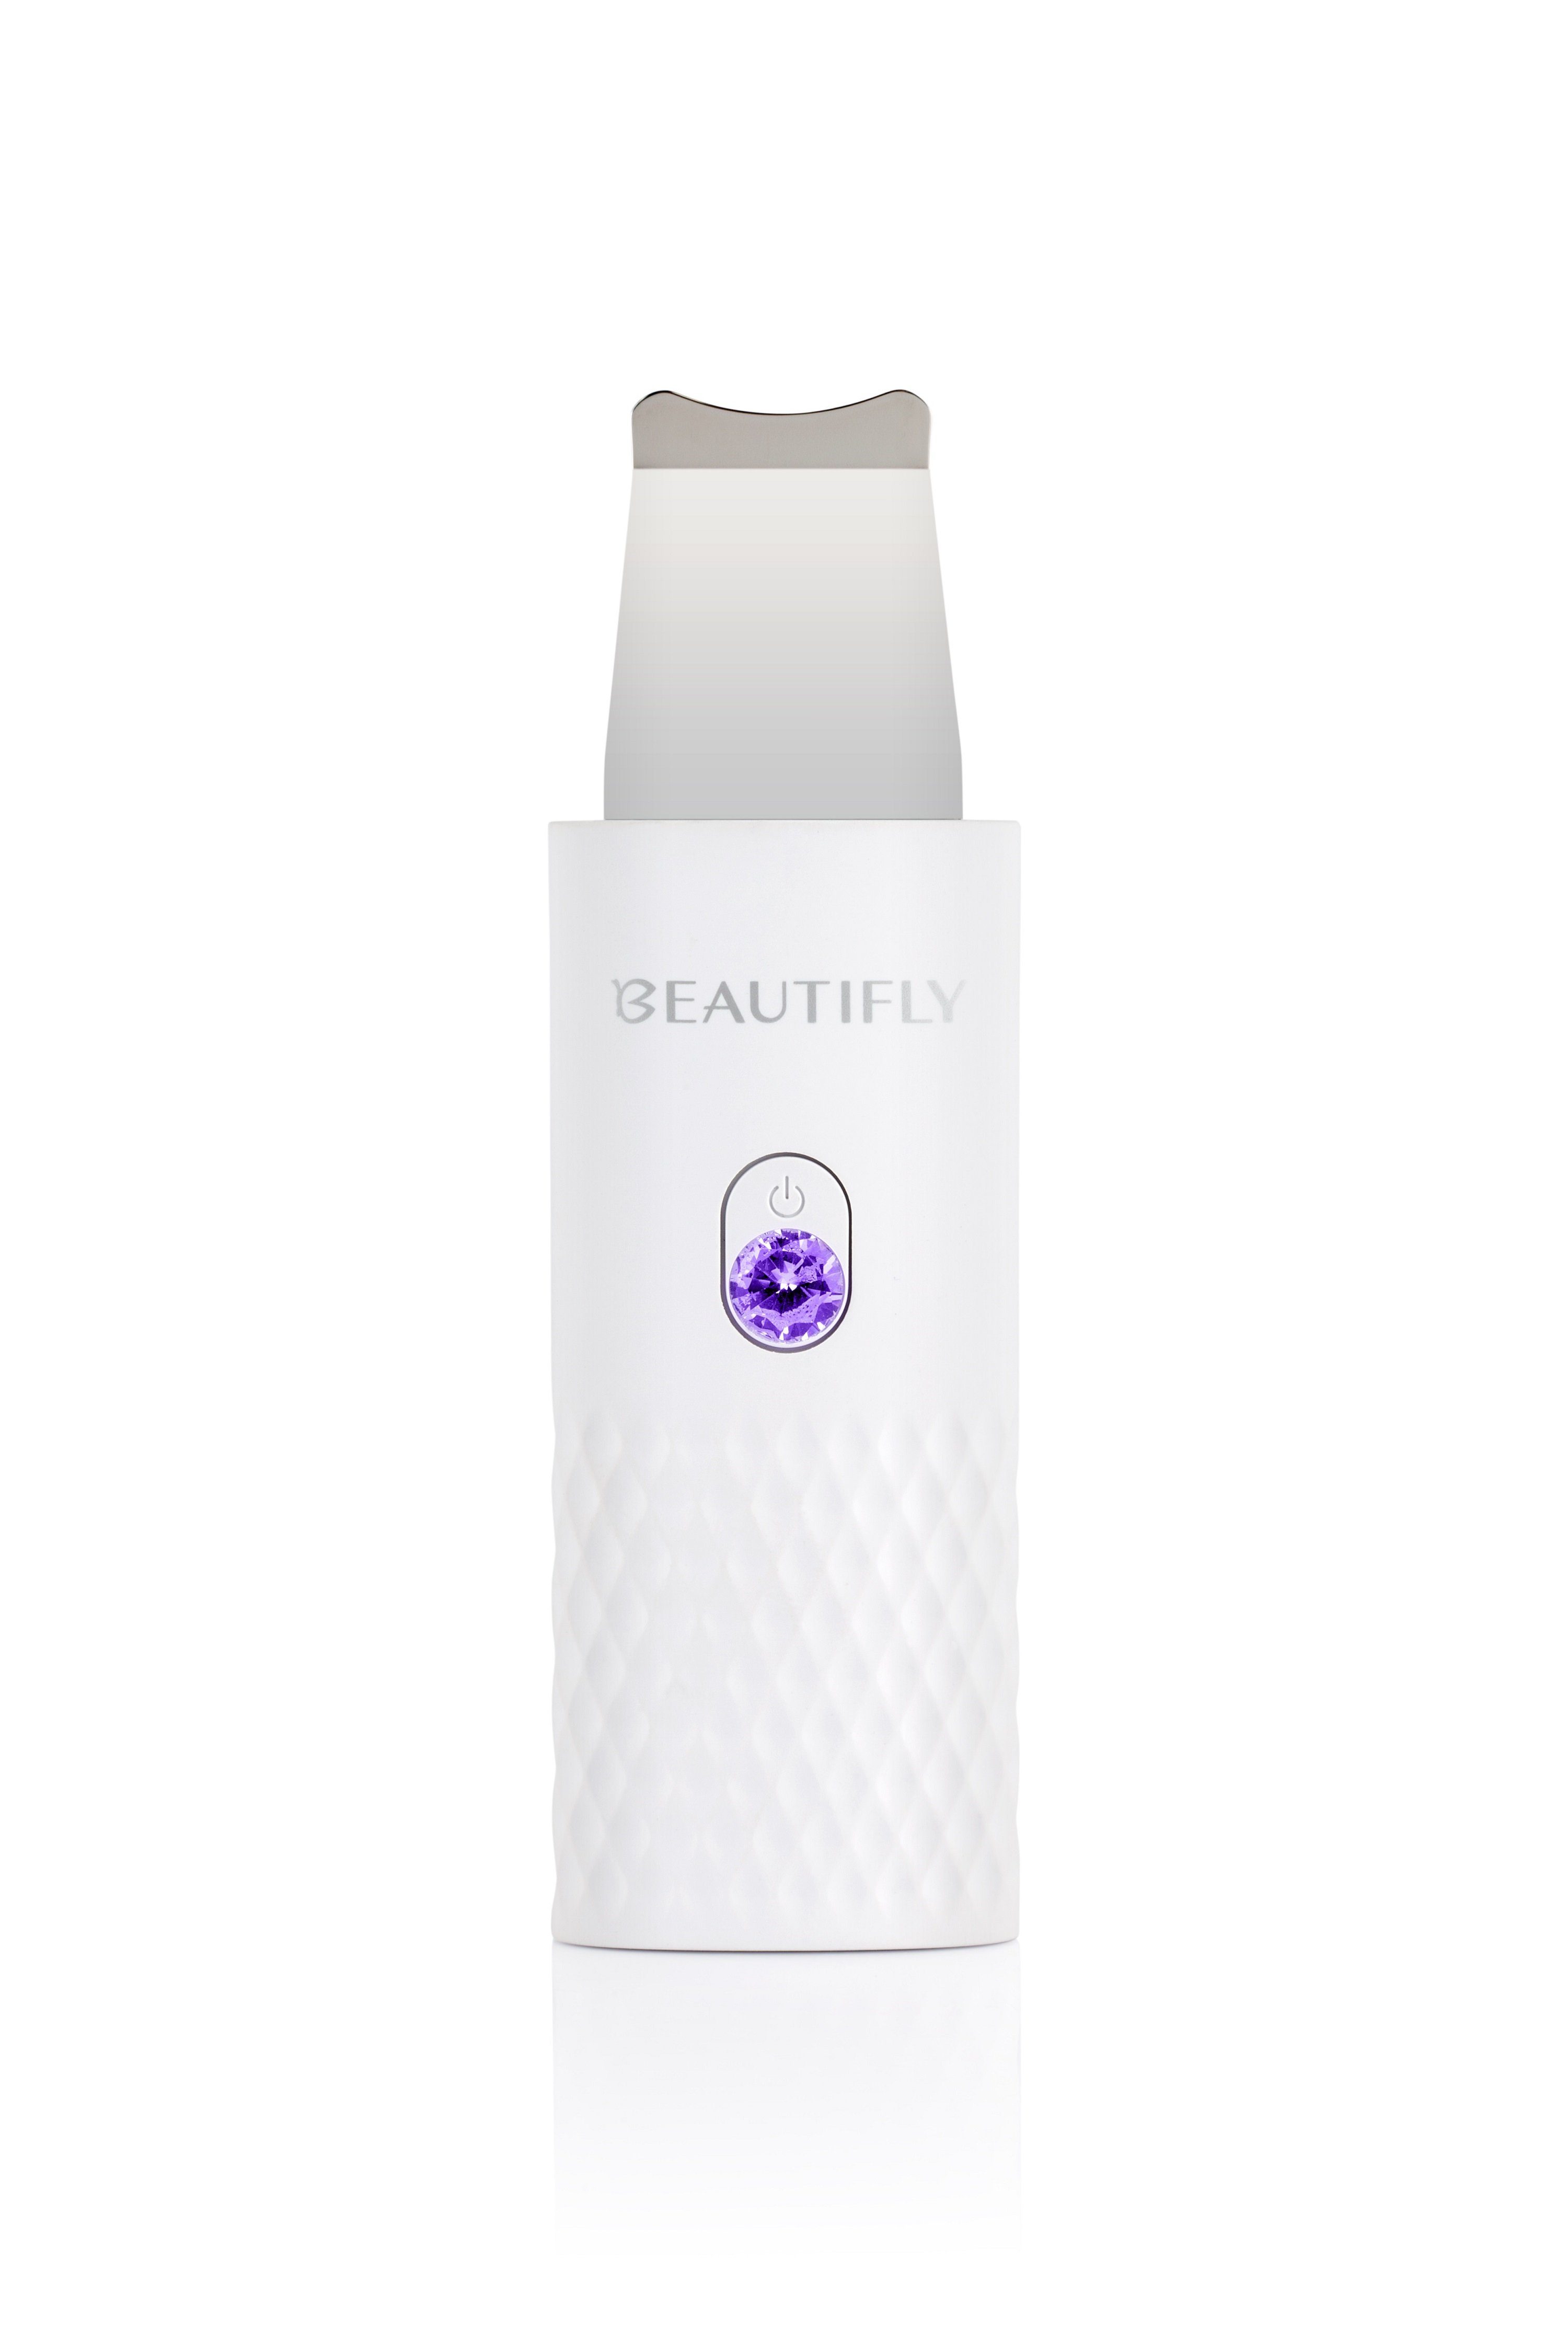 B-SCRUB-MINI Beautifly Elektrische Gesichtsreinigungsbürste Ultraschall-Peelinggerät